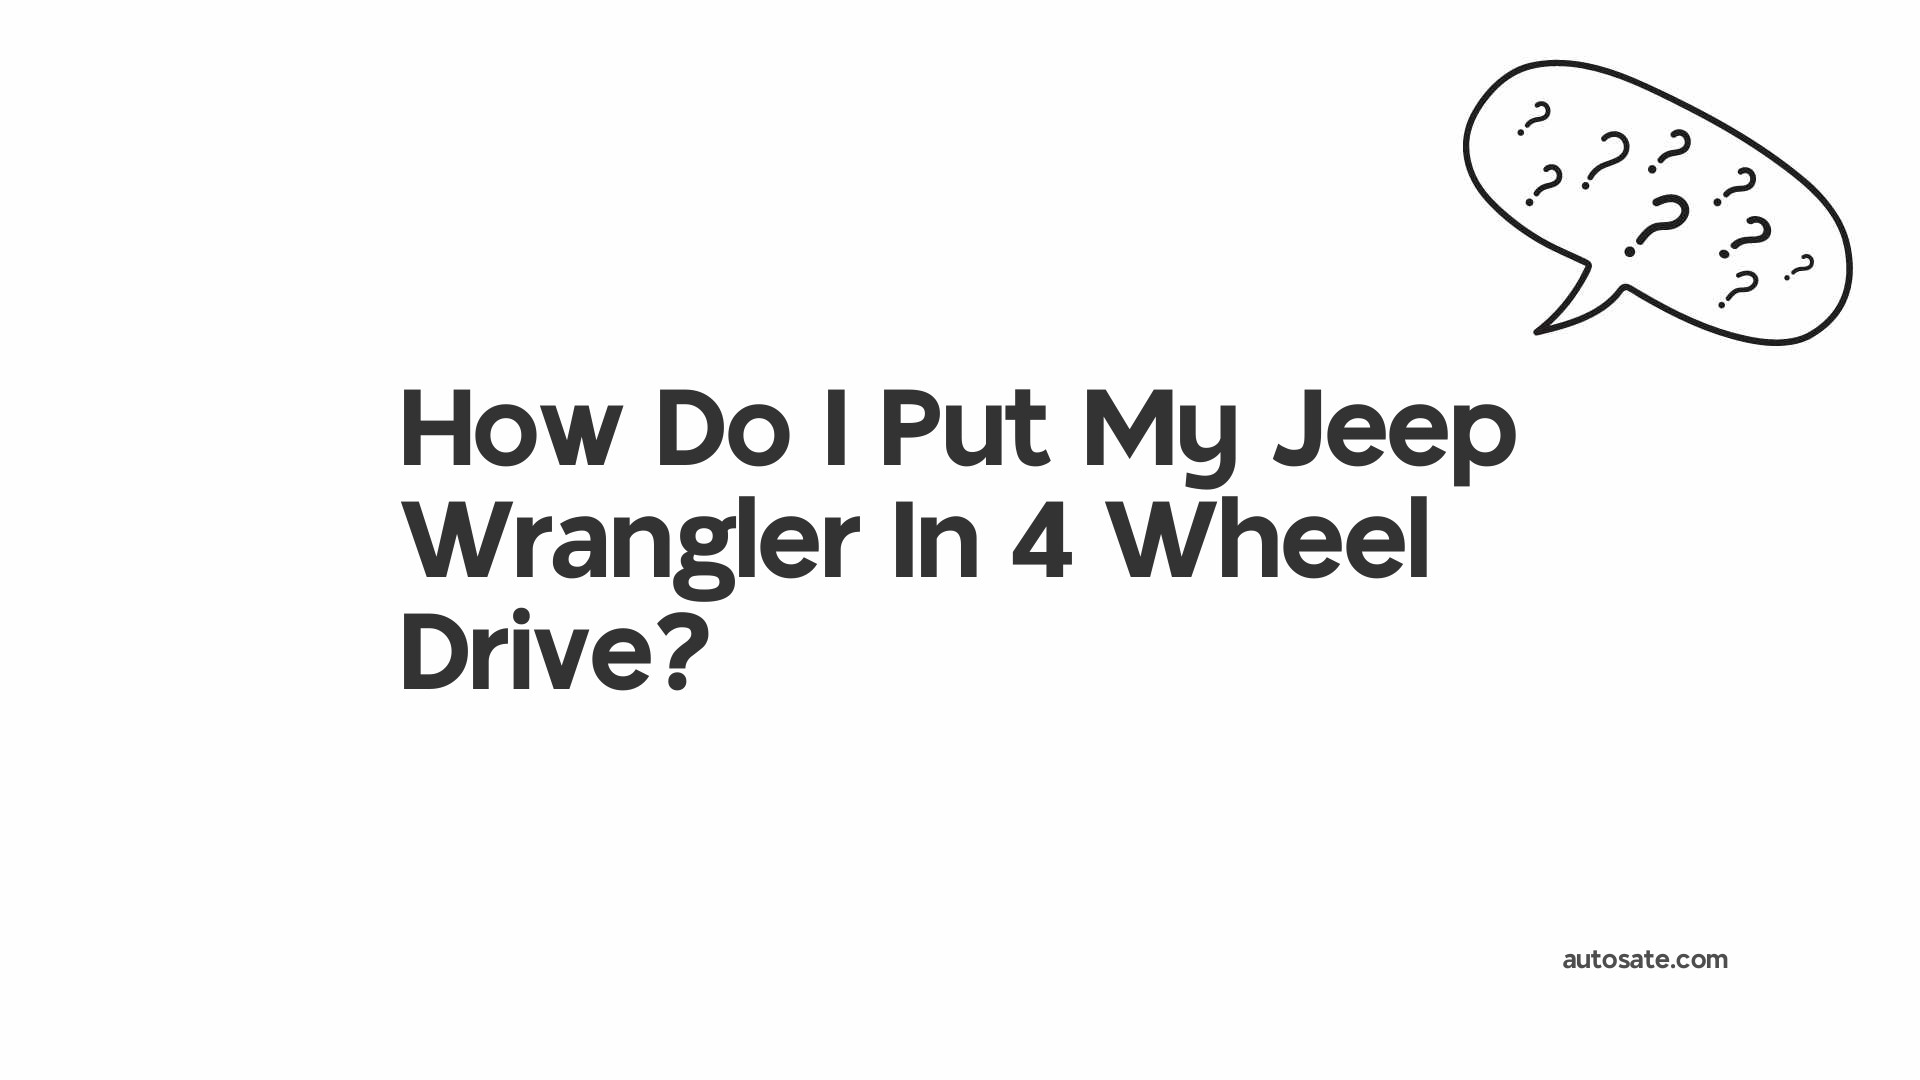 How Do I Put My Jeep Wrangler In 4 Wheel Drive?